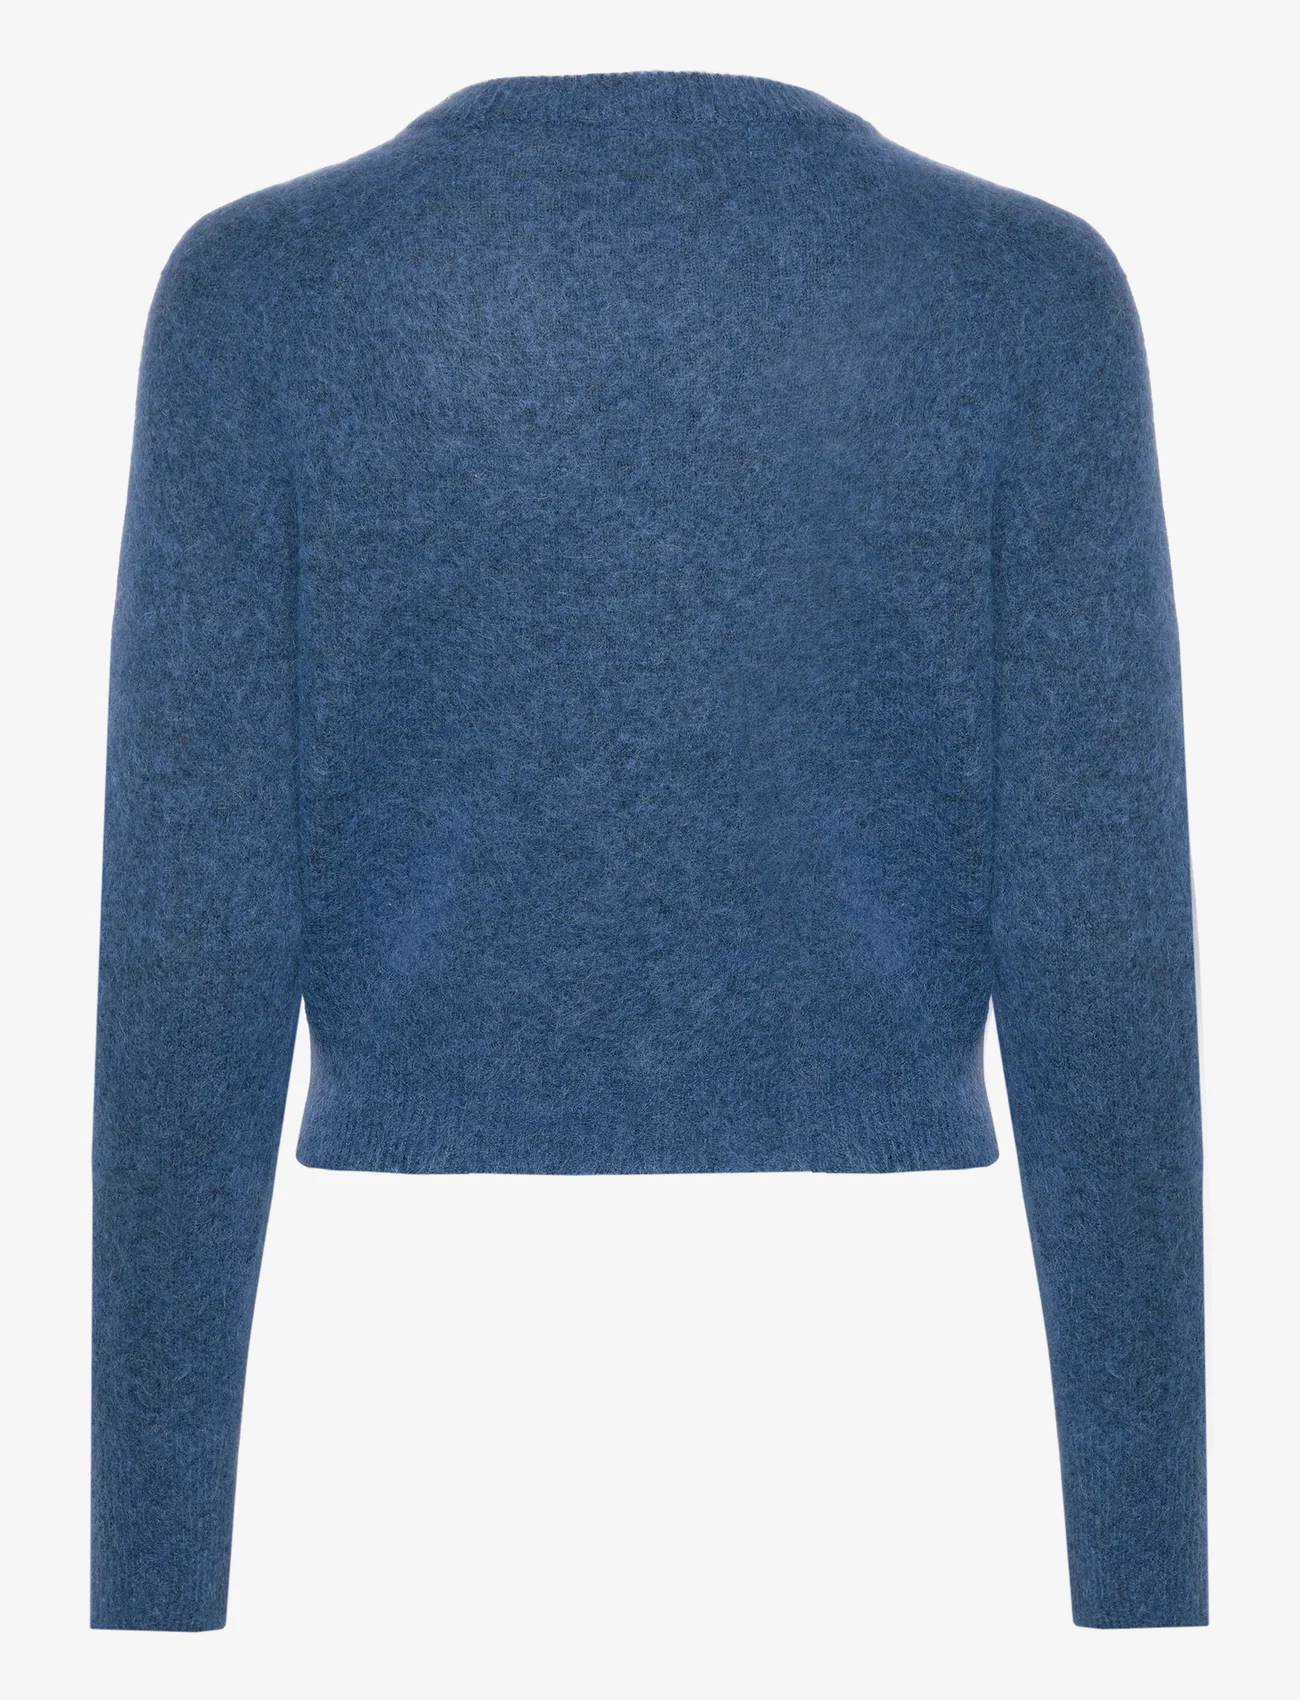 Cathrine Hammel - Mohair girlfriend sweater - jumpers - sky blue - 1